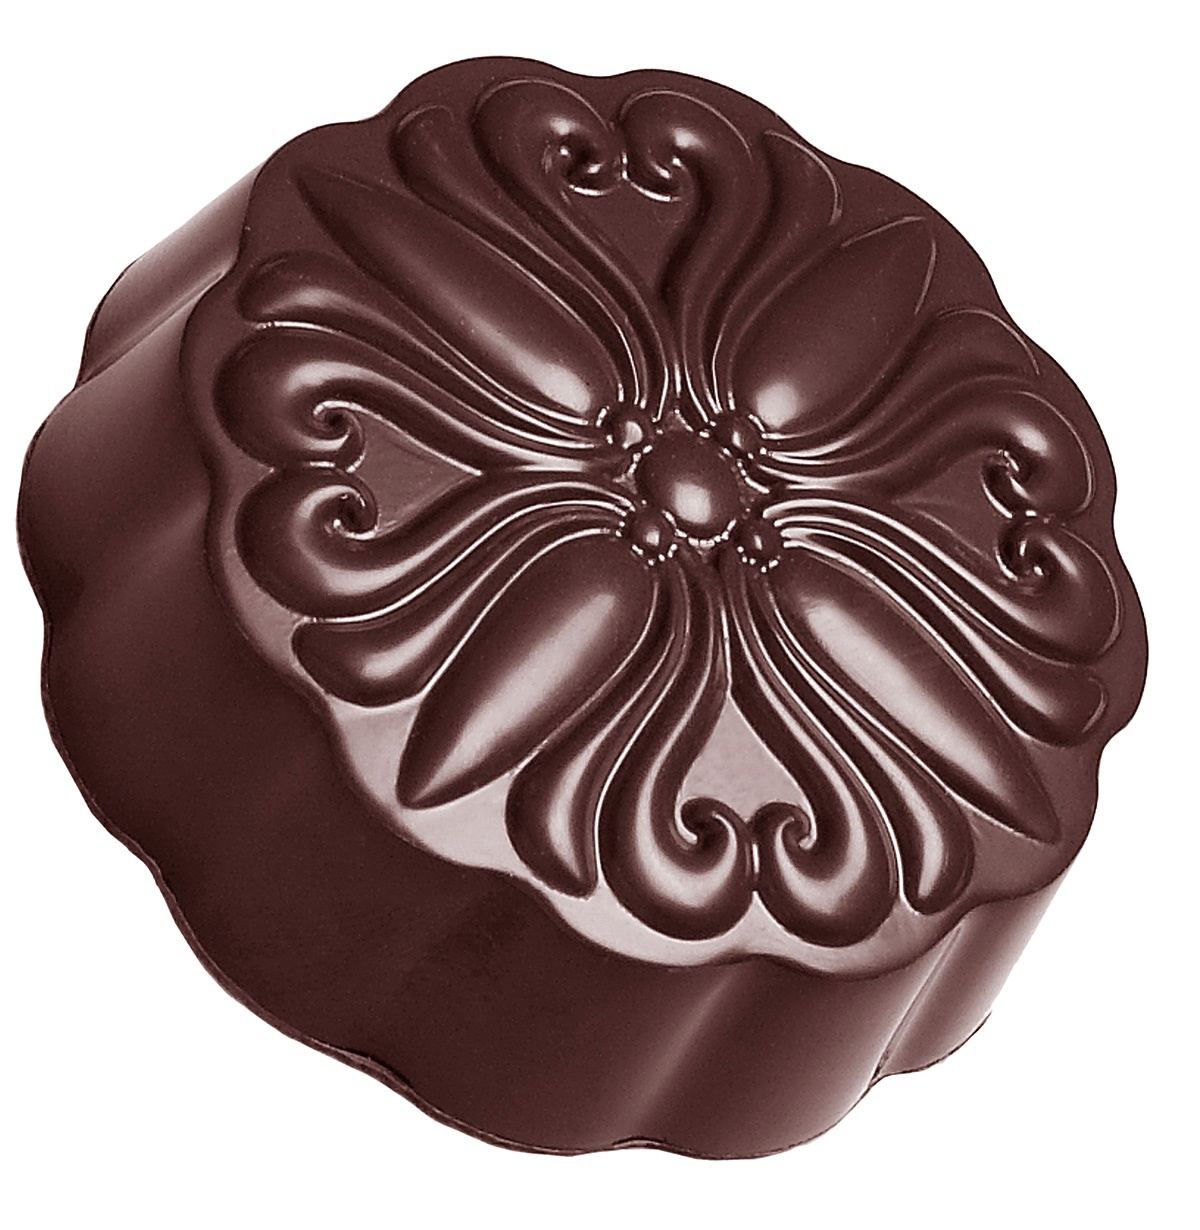 https://www.pastrychefsboutique.com/24735/chocolate-world-cw1542-polycarbonate-festive-japanese-mooncake-chocolate-mold-54-x-54-x-16-mm-39gr-2x4-cavity-275x135x24mm-choco.jpg